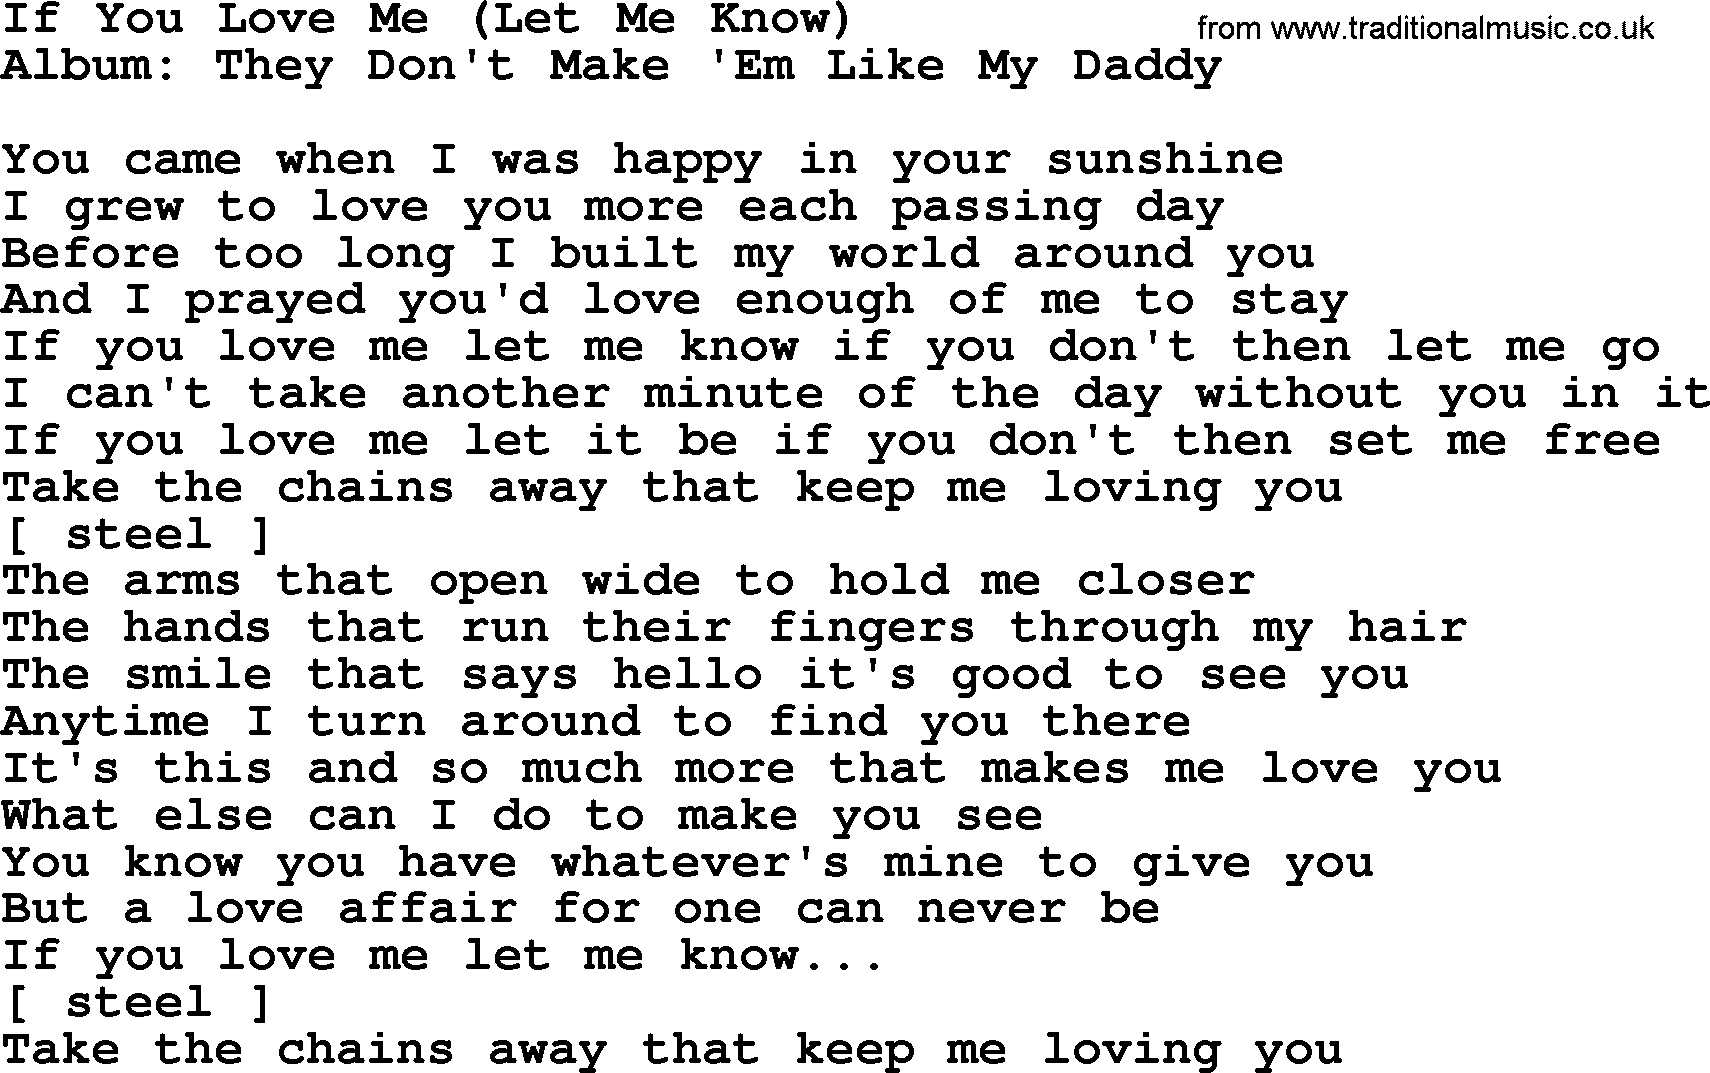 Loretta Lynn song: If You Love Me (Let Me Know) lyrics